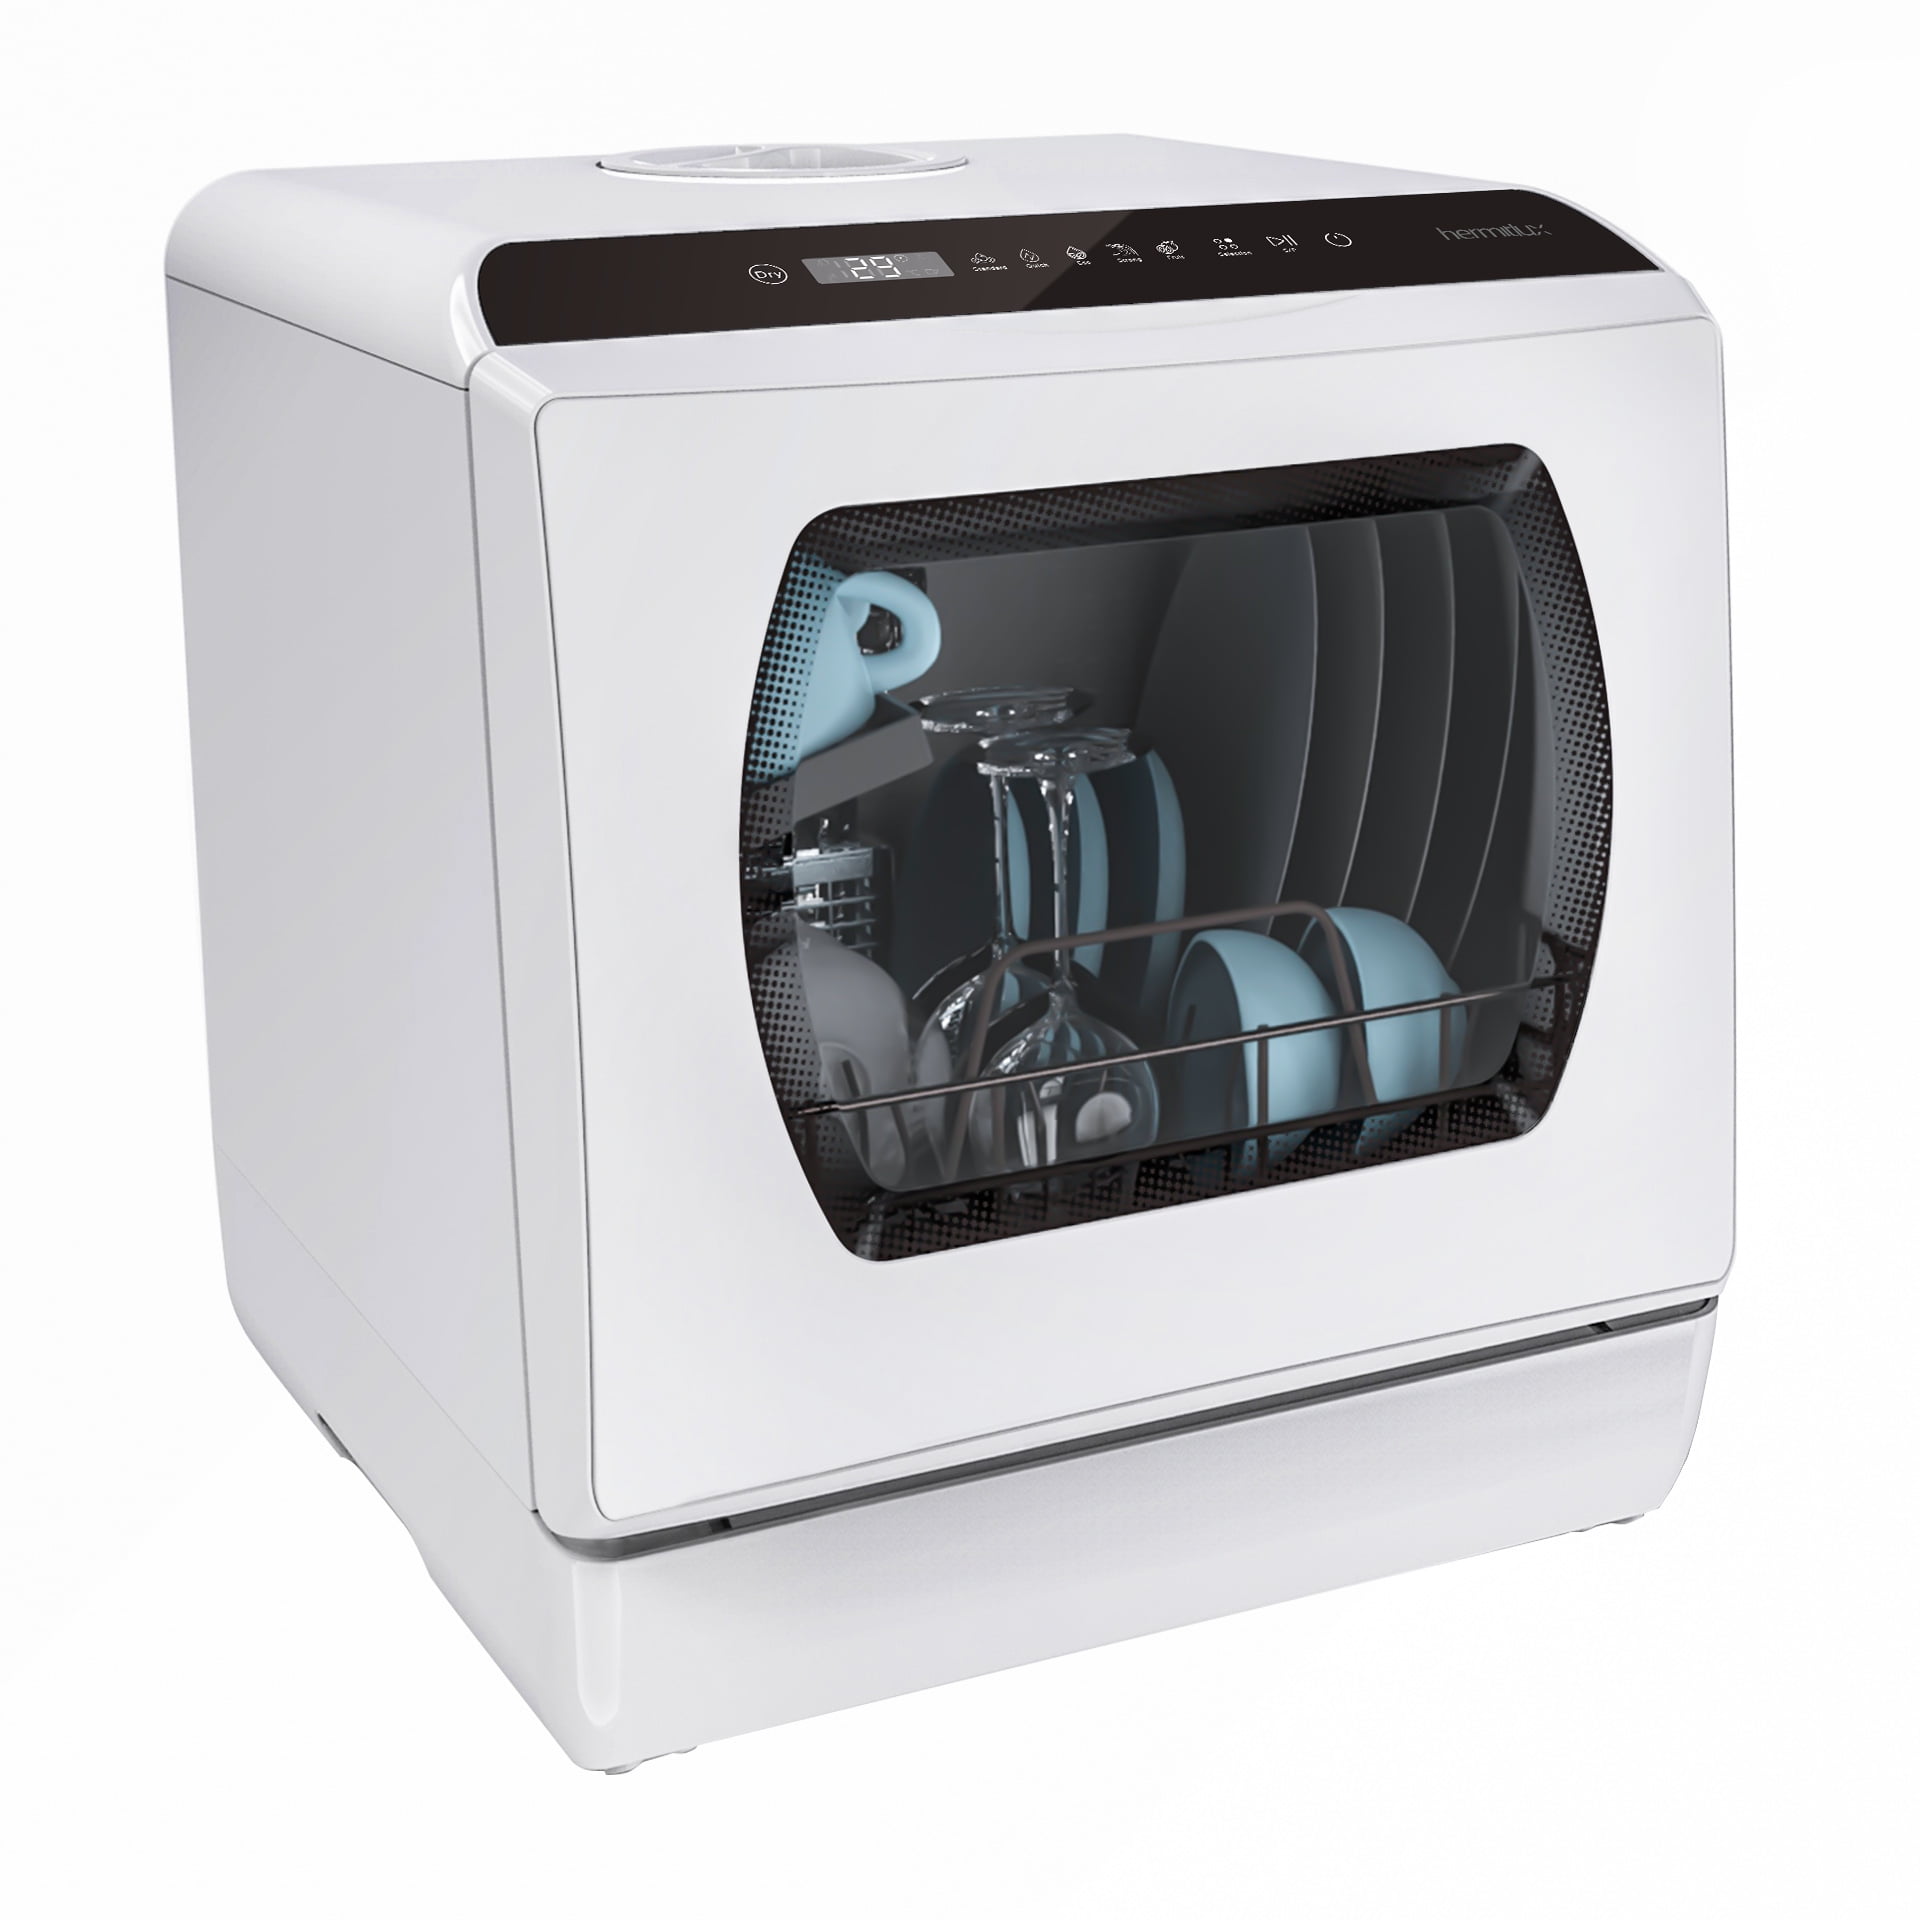 Mini Dishwasher, 1200W Portable Countertop Dishwasher with 5 Washing  Programs, Compact Dishwasher Washing, 360° Spray Arms Freestanding